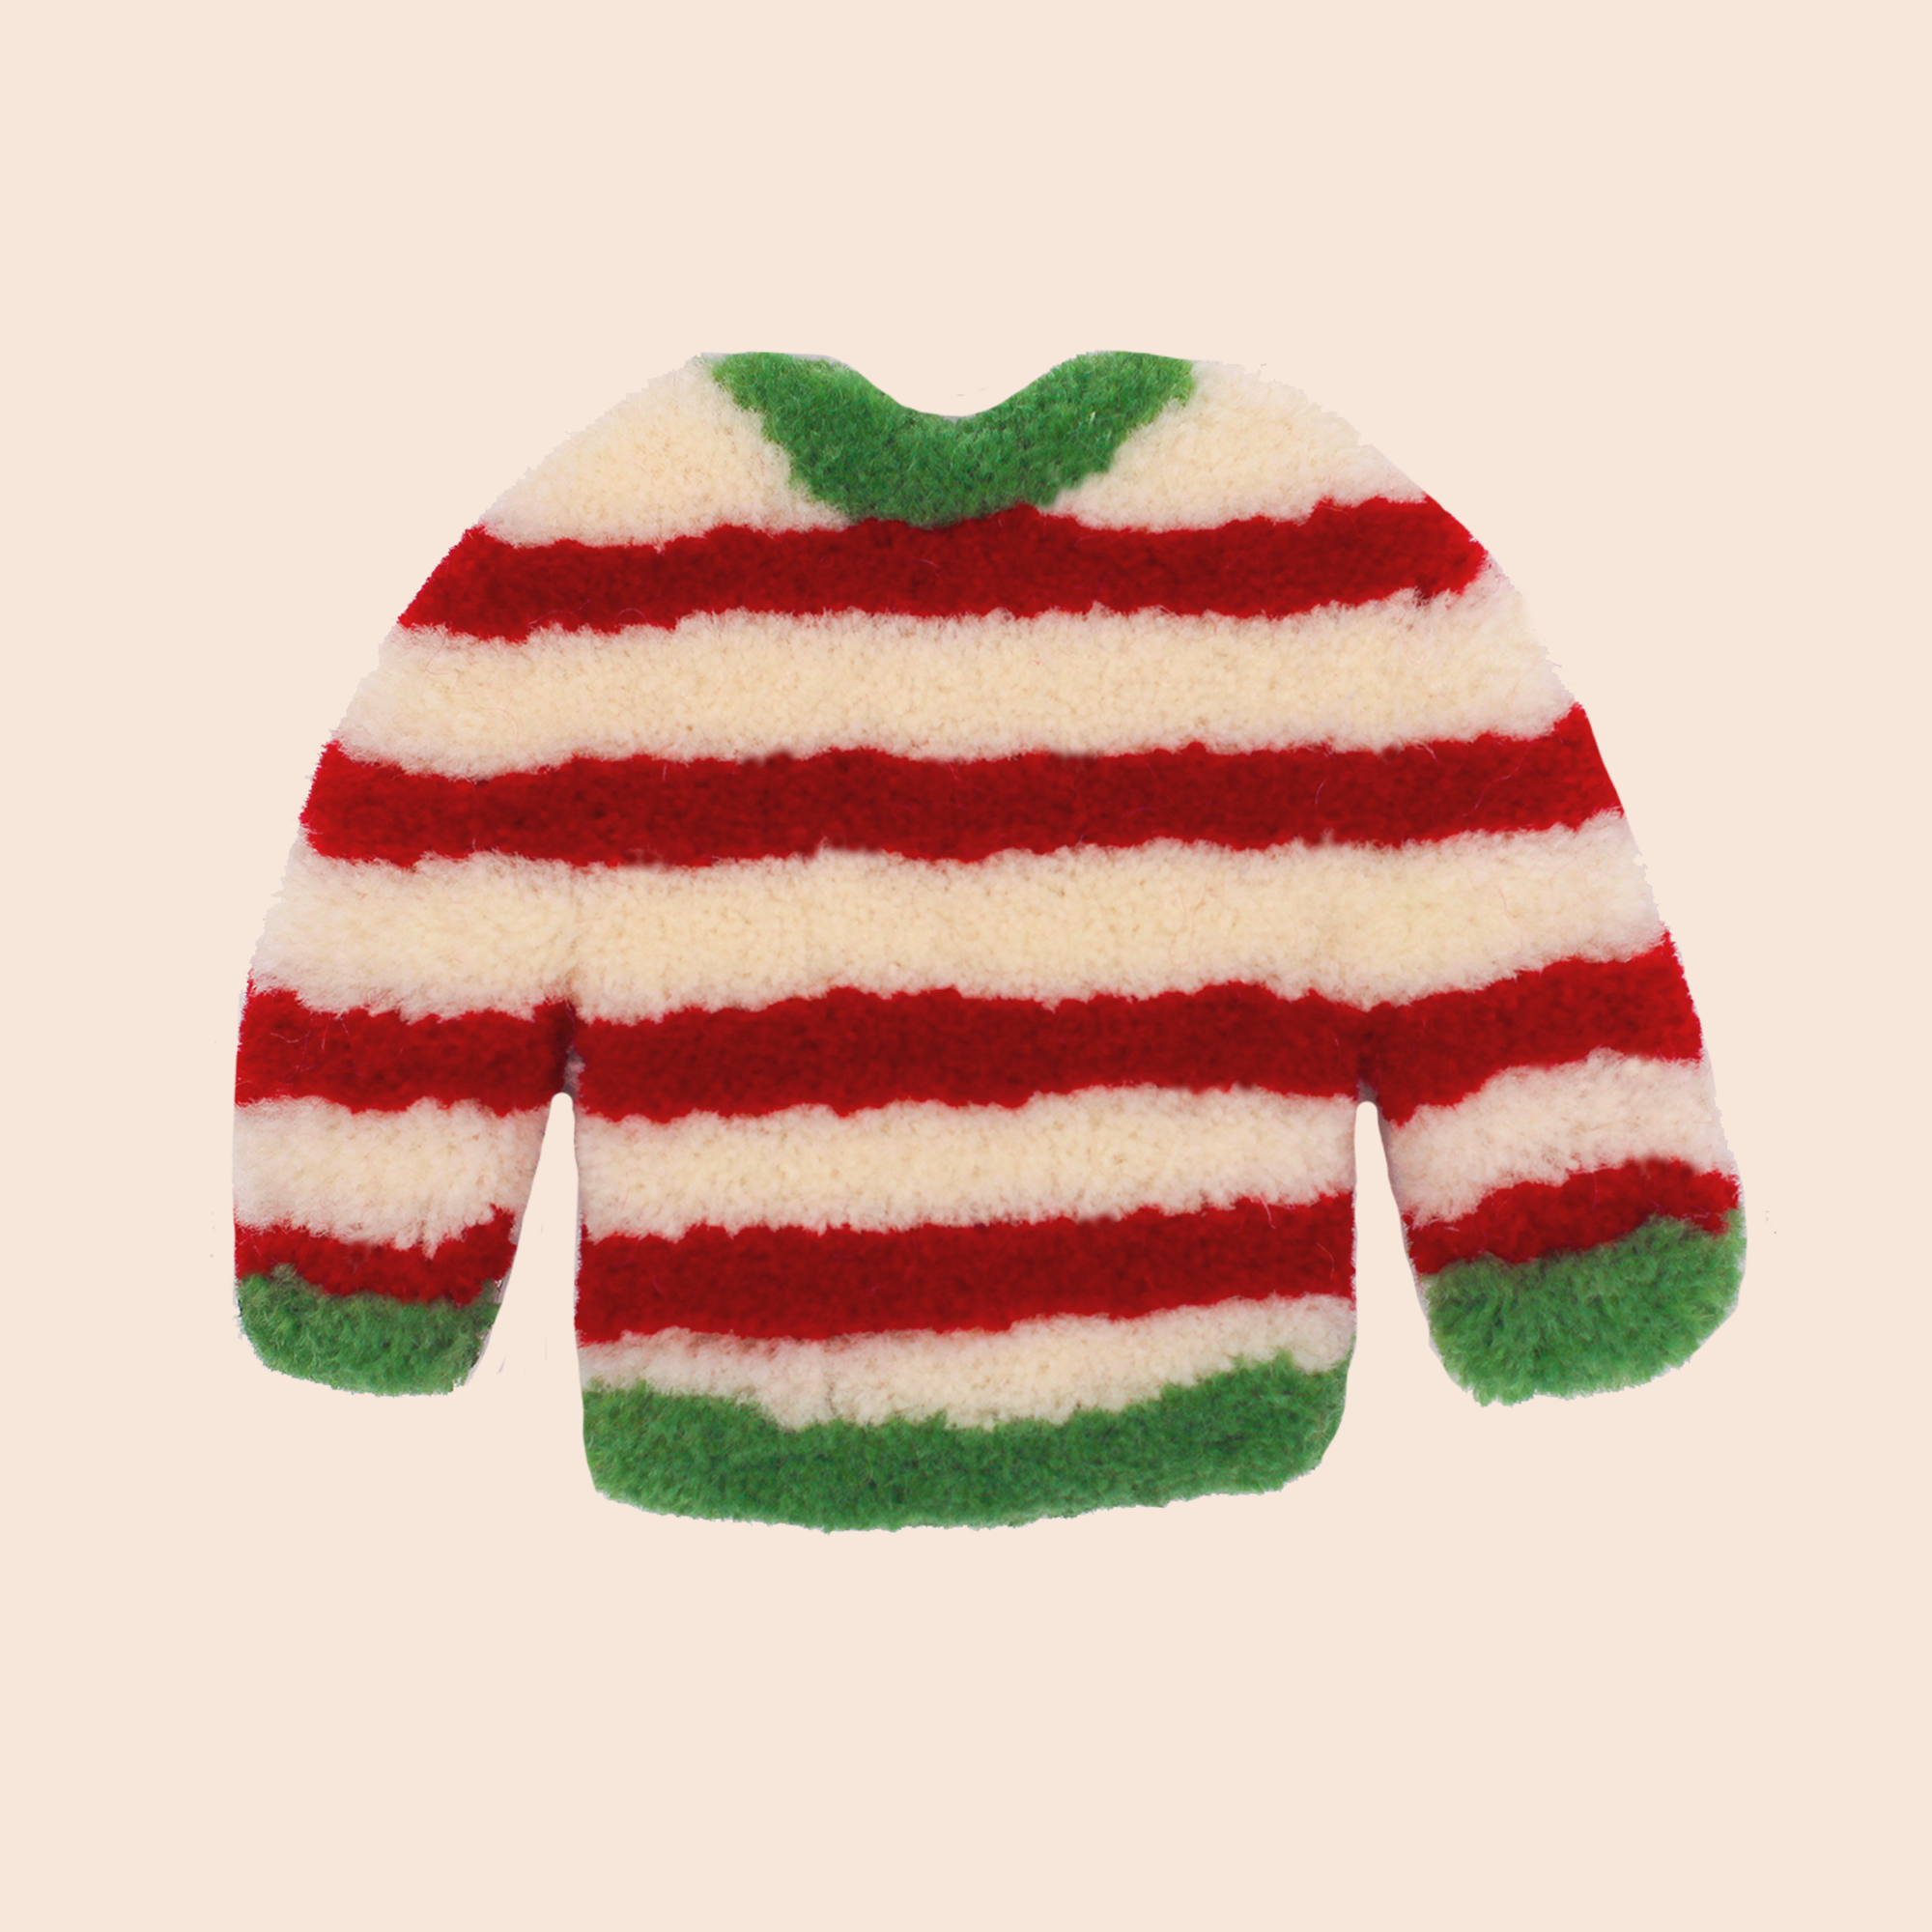 Holiday Sweater Mug Rugs